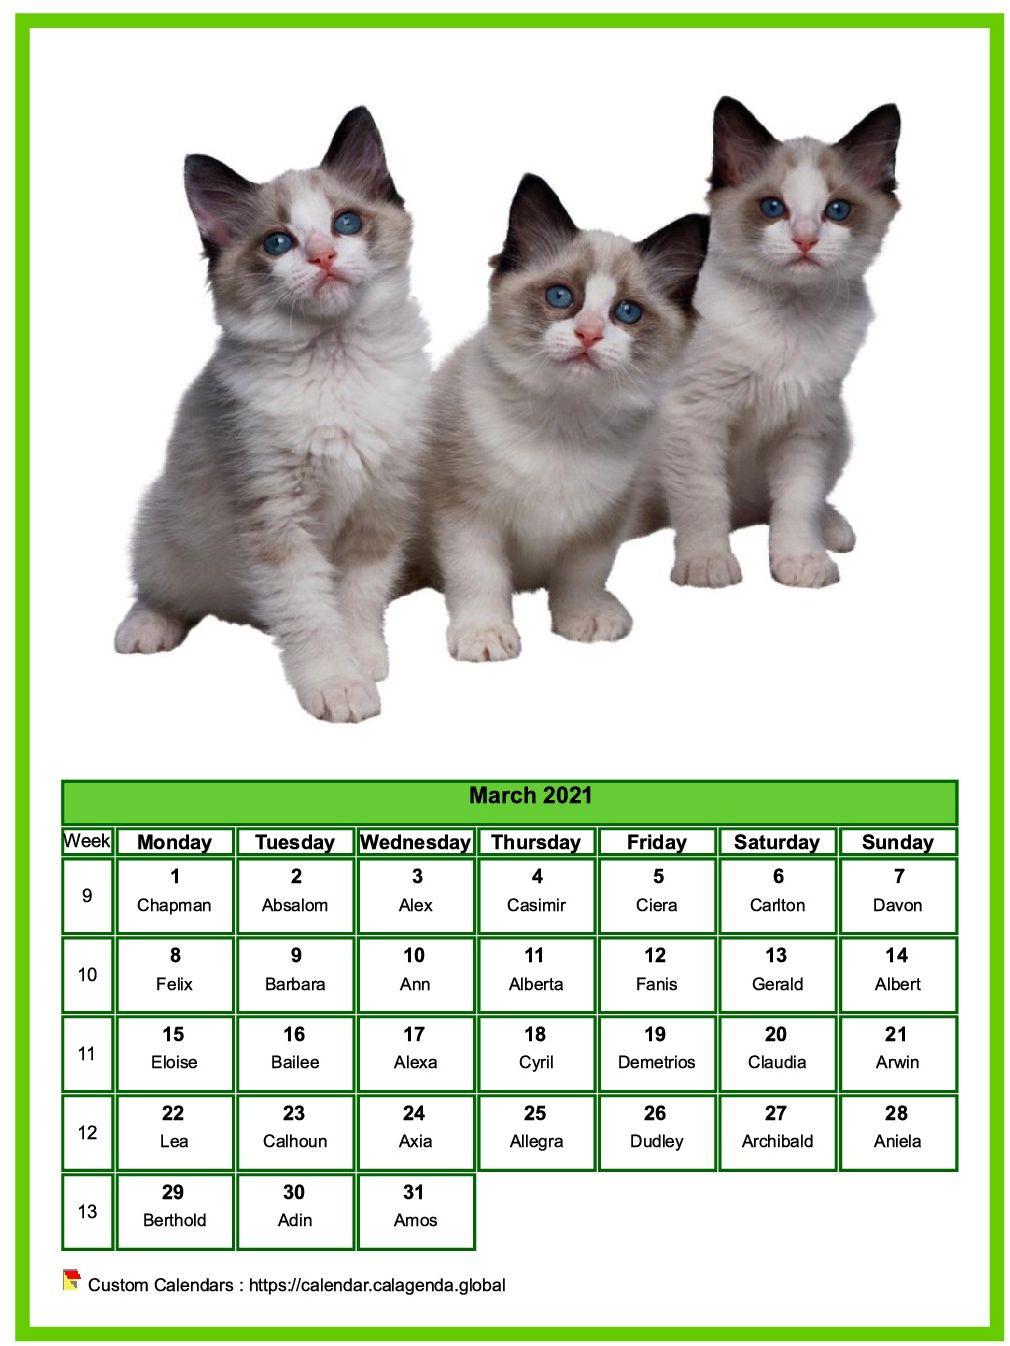 Calendar March 2021 cats